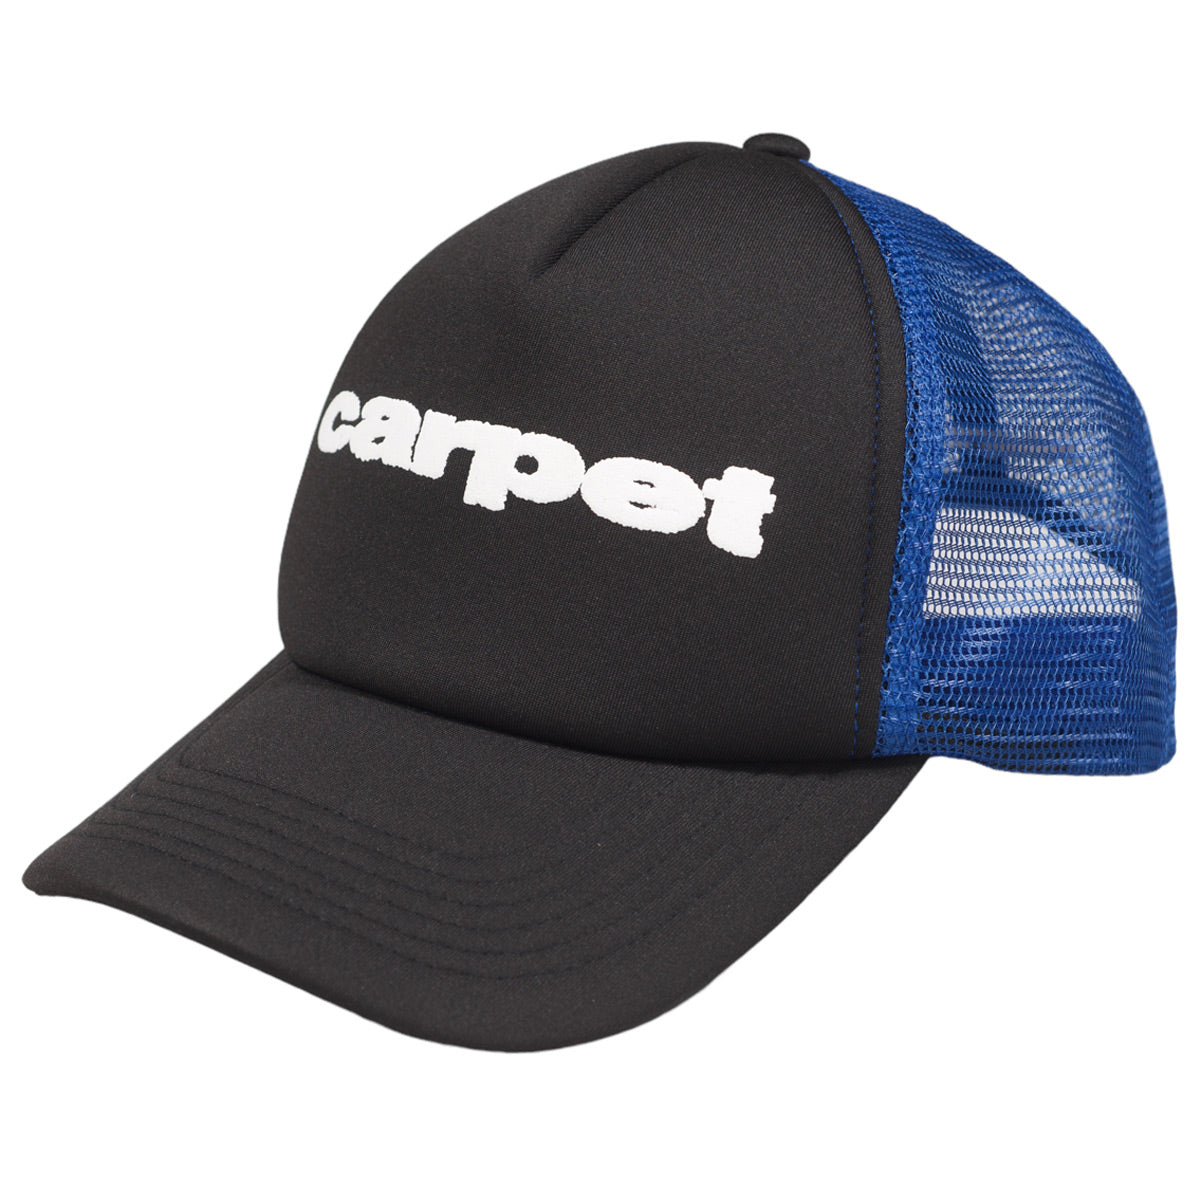 Carpet Company Carpet Puff Trucker Hat - Black/Blue image 1